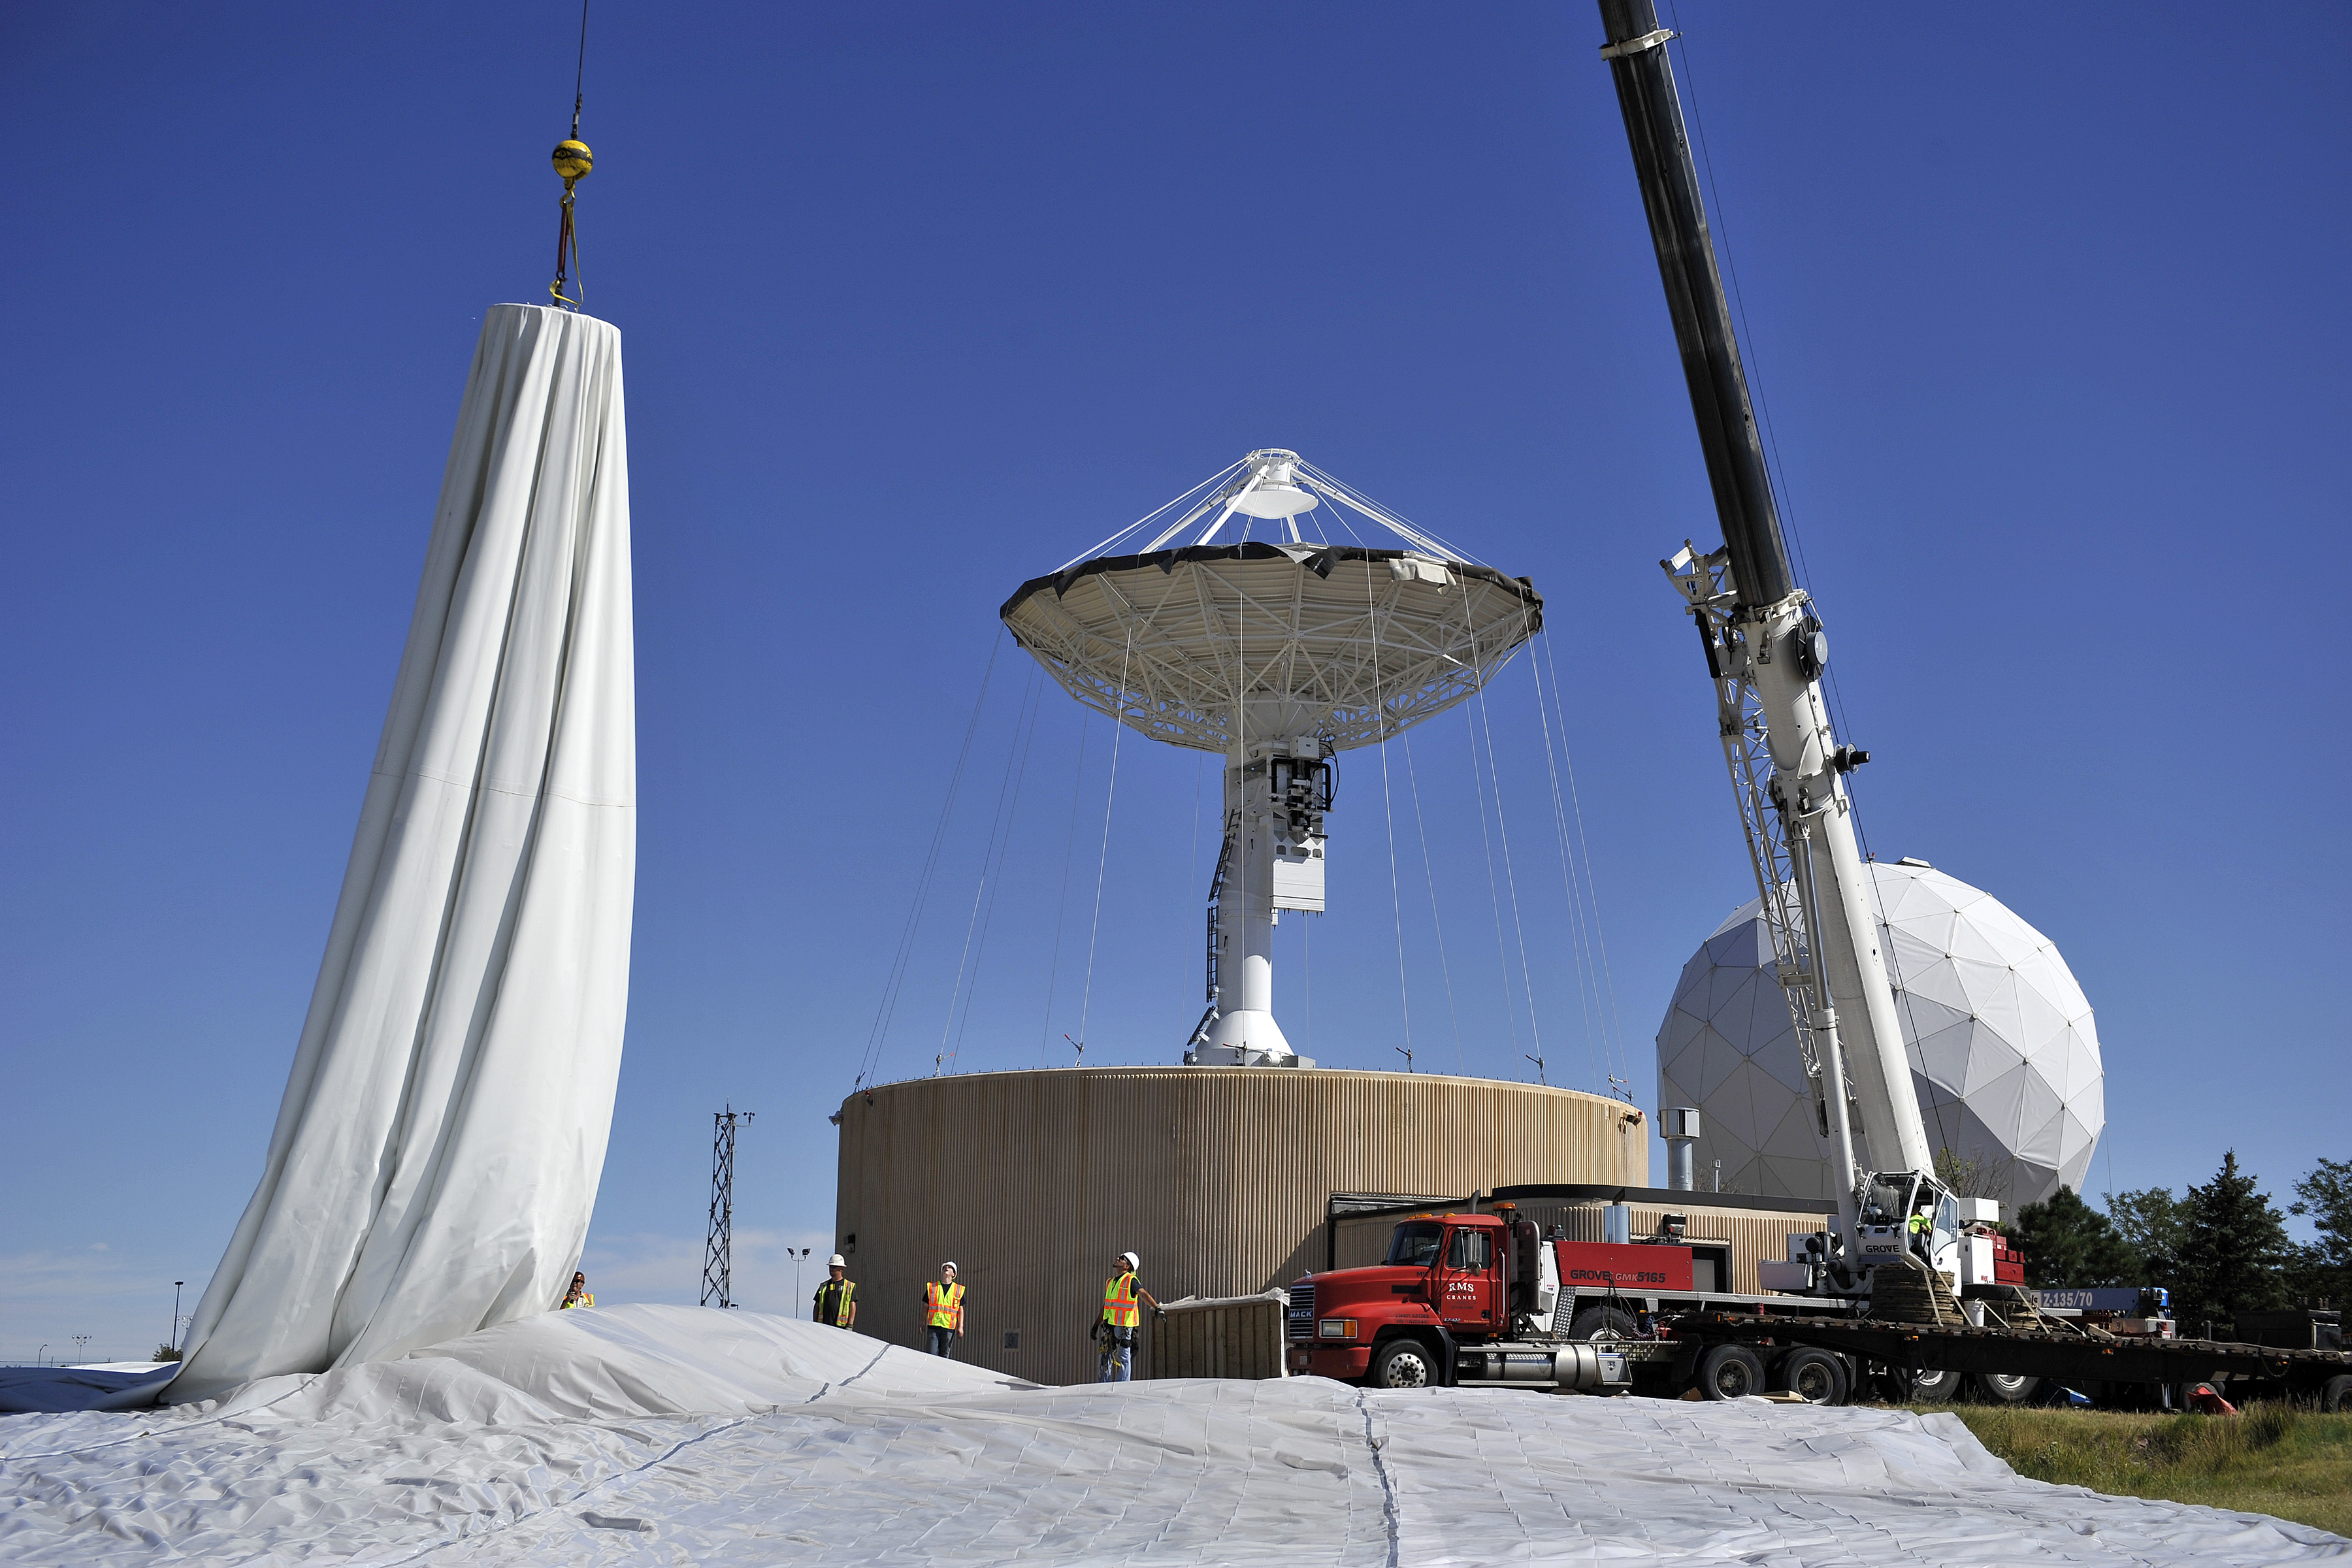 RBC antenna begins removal process